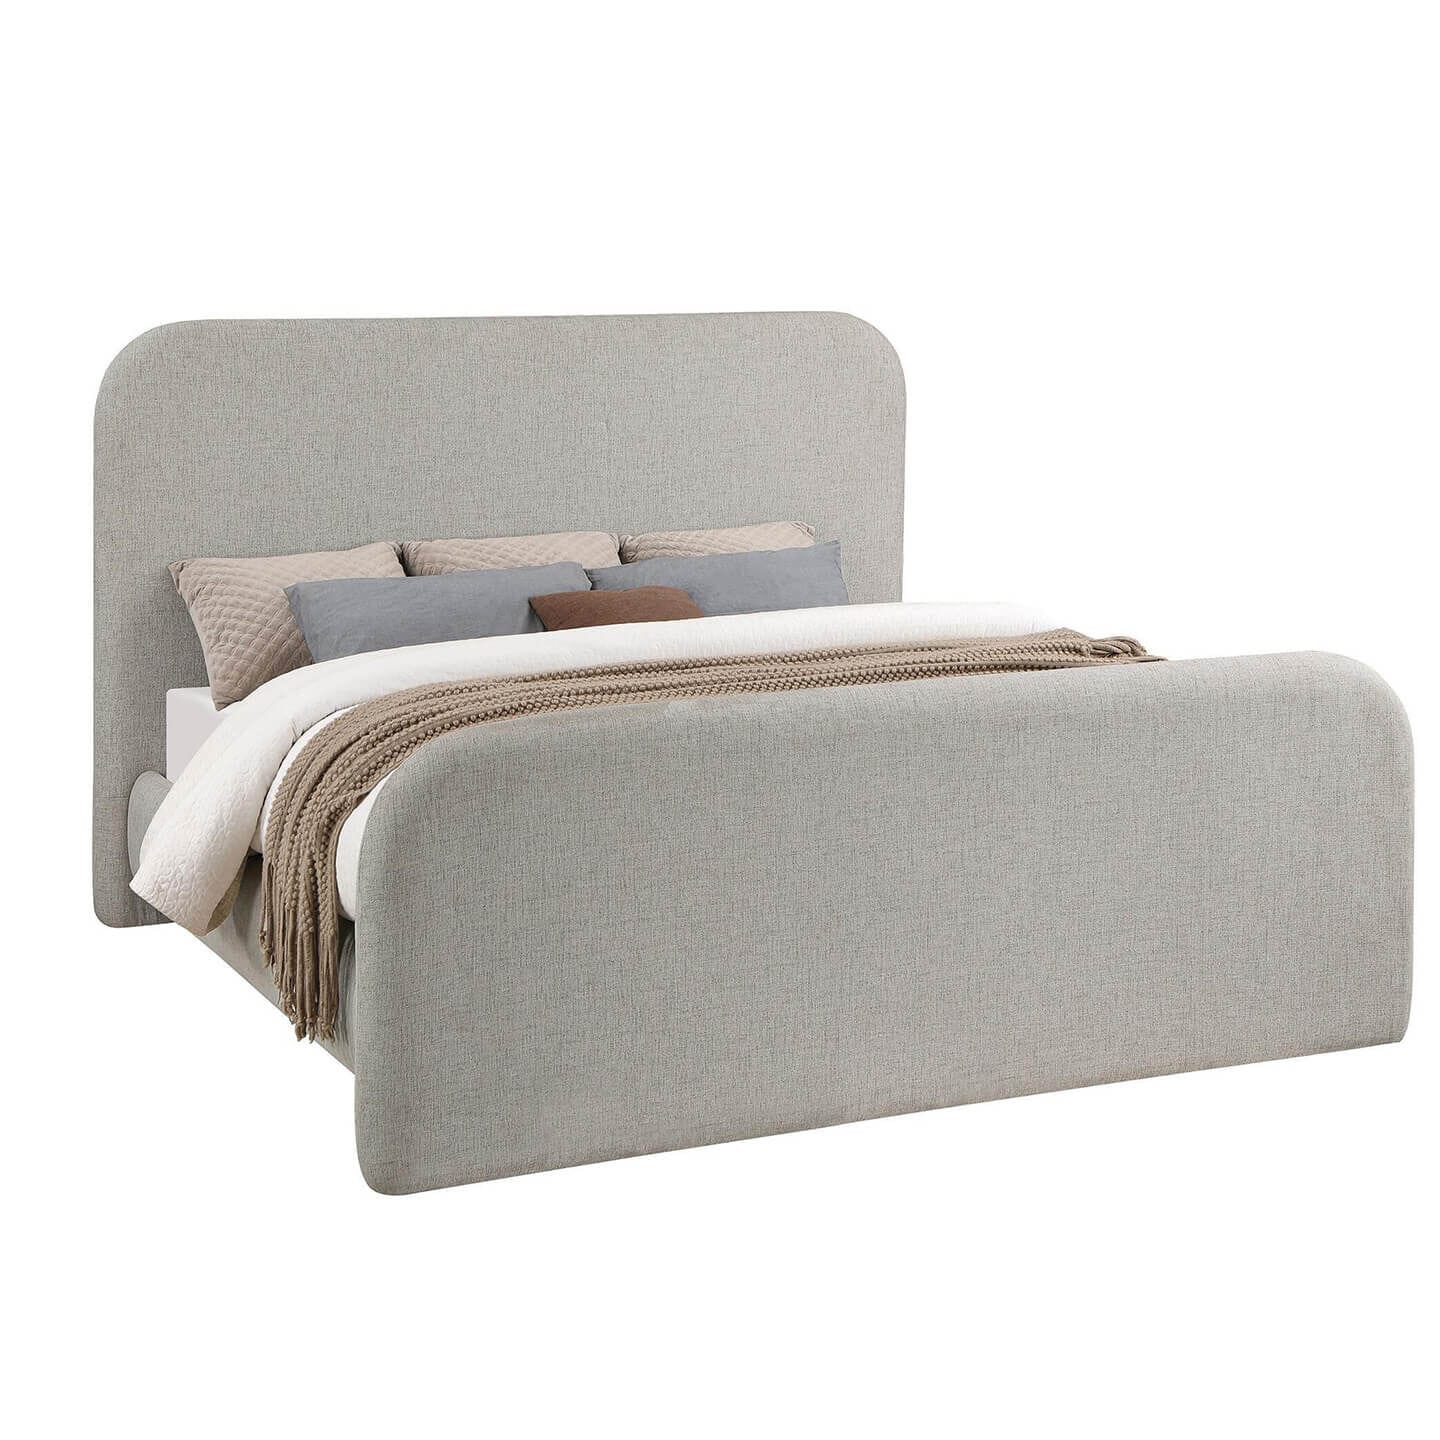 Pacific Landing Wren King Upholstered Bed in Cream